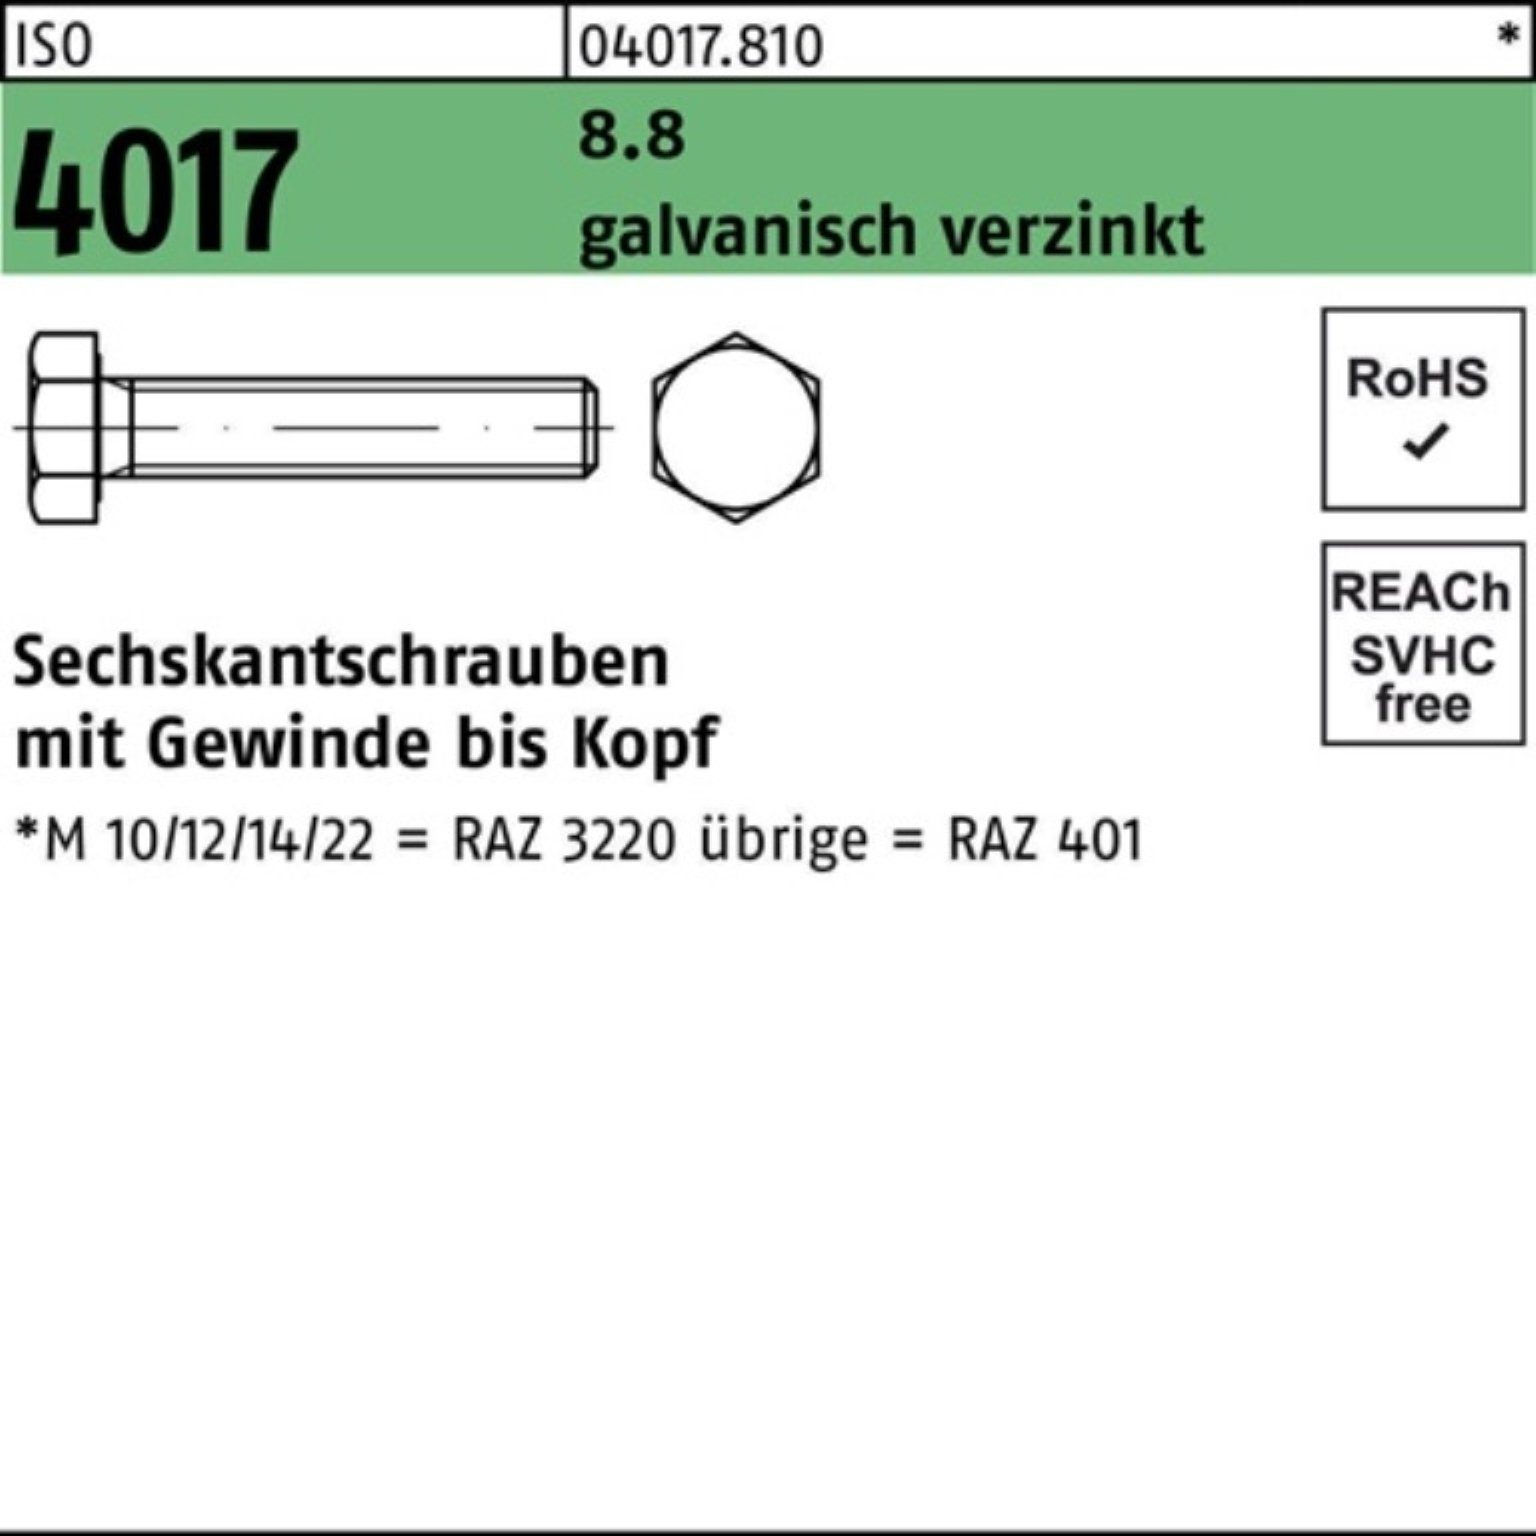 Sechskantschraube Pack Sechskantschraube VG 28 Bufab 8.8 M6x 500 4017 St ISO 500er galv.verz.